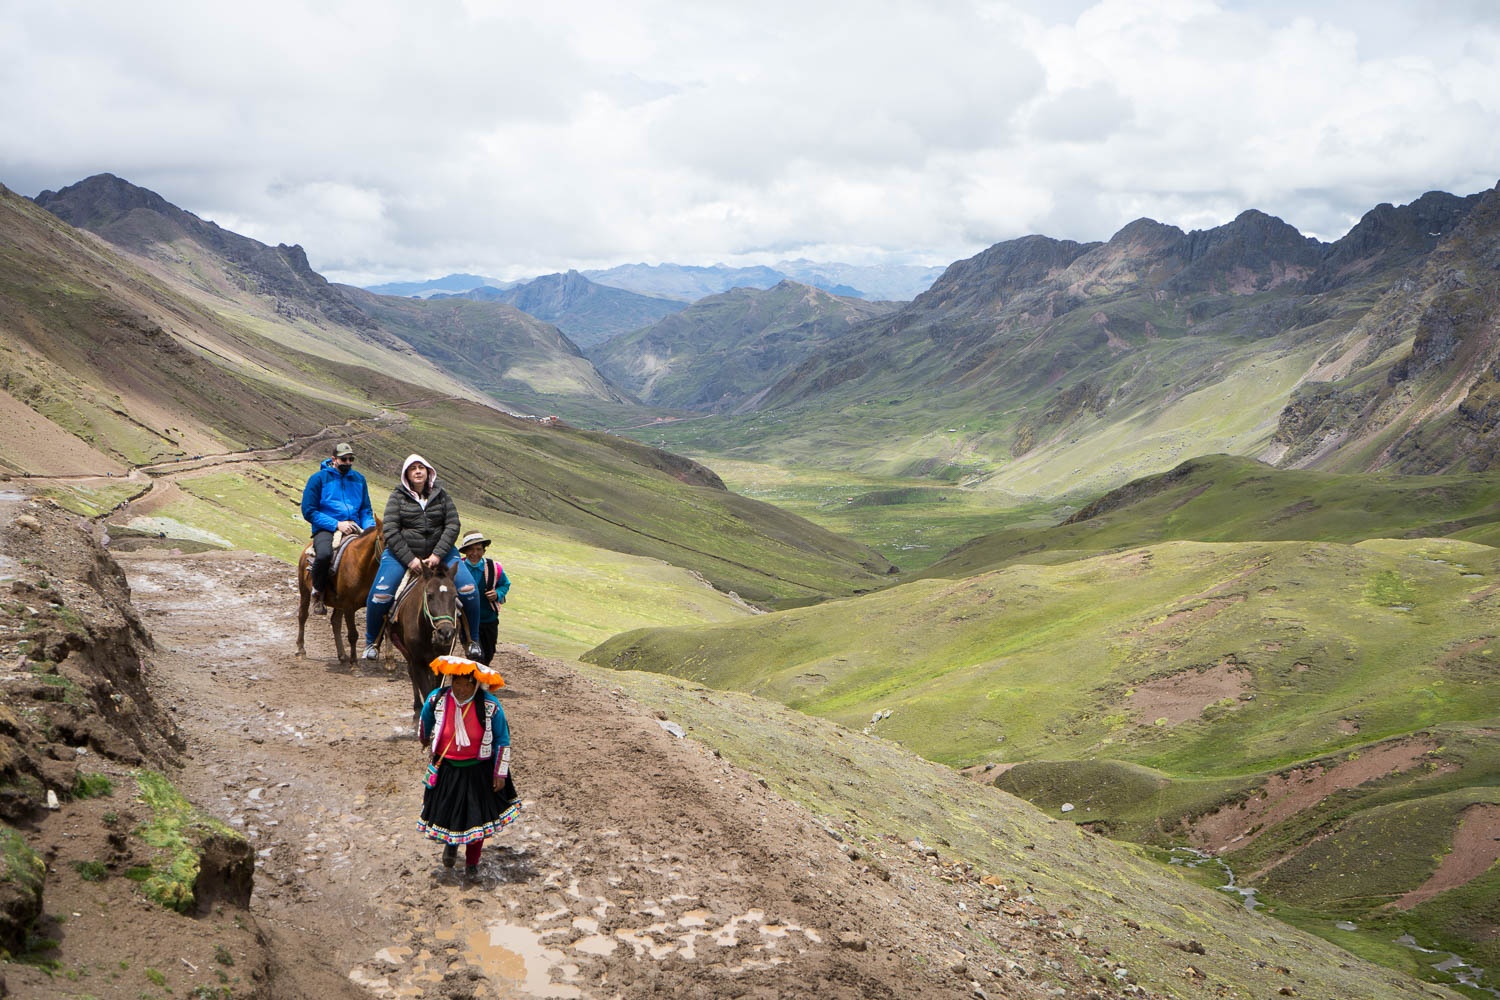 Some tourists take horses to the mountain